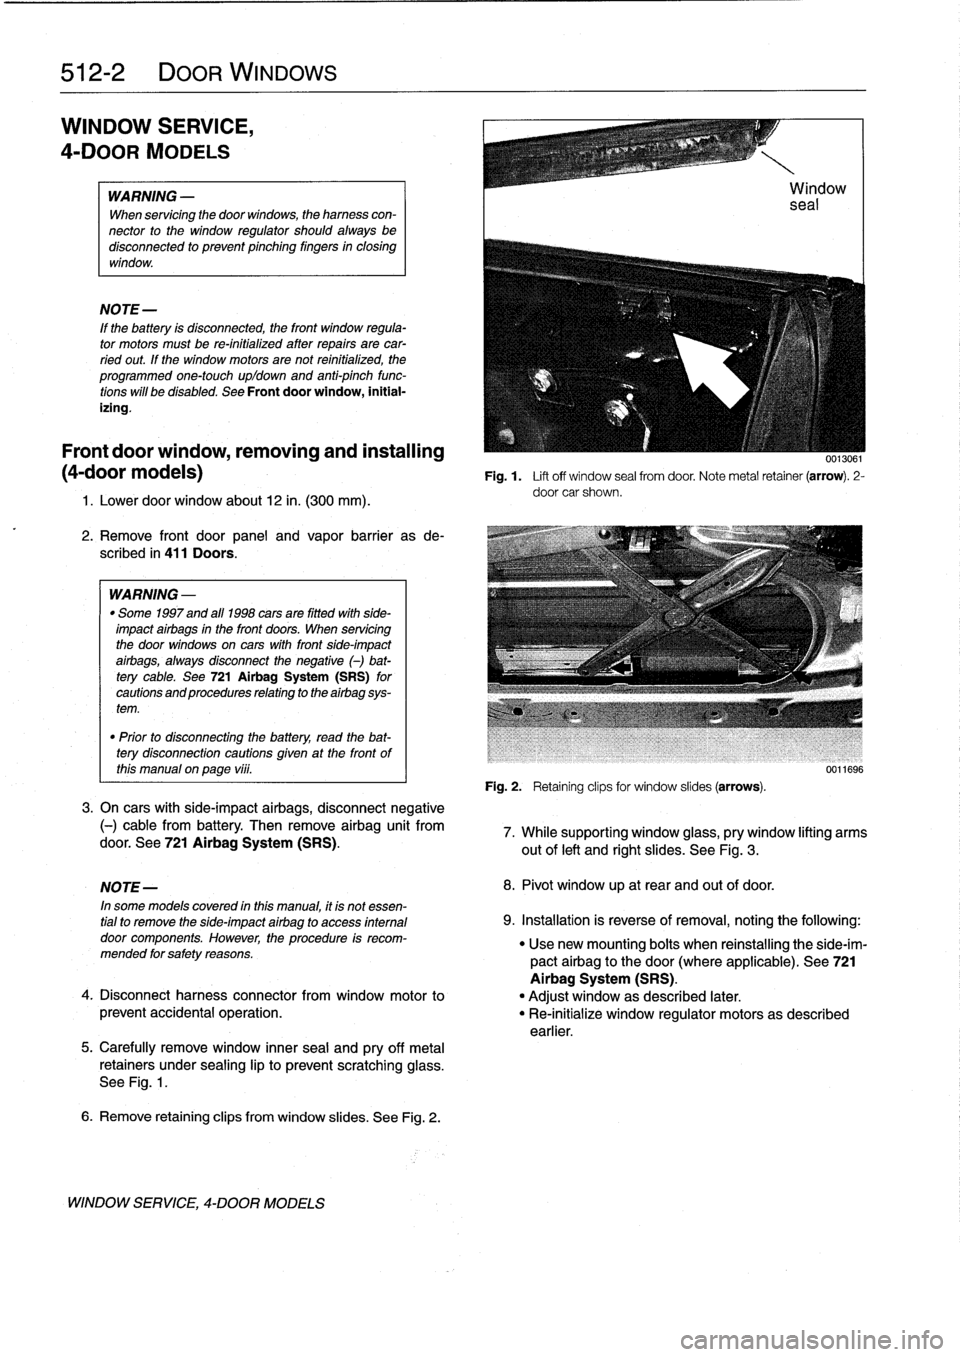 BMW 323i 1992 E36 Workshop Manual 
512-2

	

DOOR
WINDOWS

WINDOW
SERVICE,

4-DOOR
MODELS

WARNING
-

When
servicing
the
door
wíndows,
theharness
con-
nector
to
the
window
regulator
shouldalways
be
disconnected
to
prevent
pinching
fi